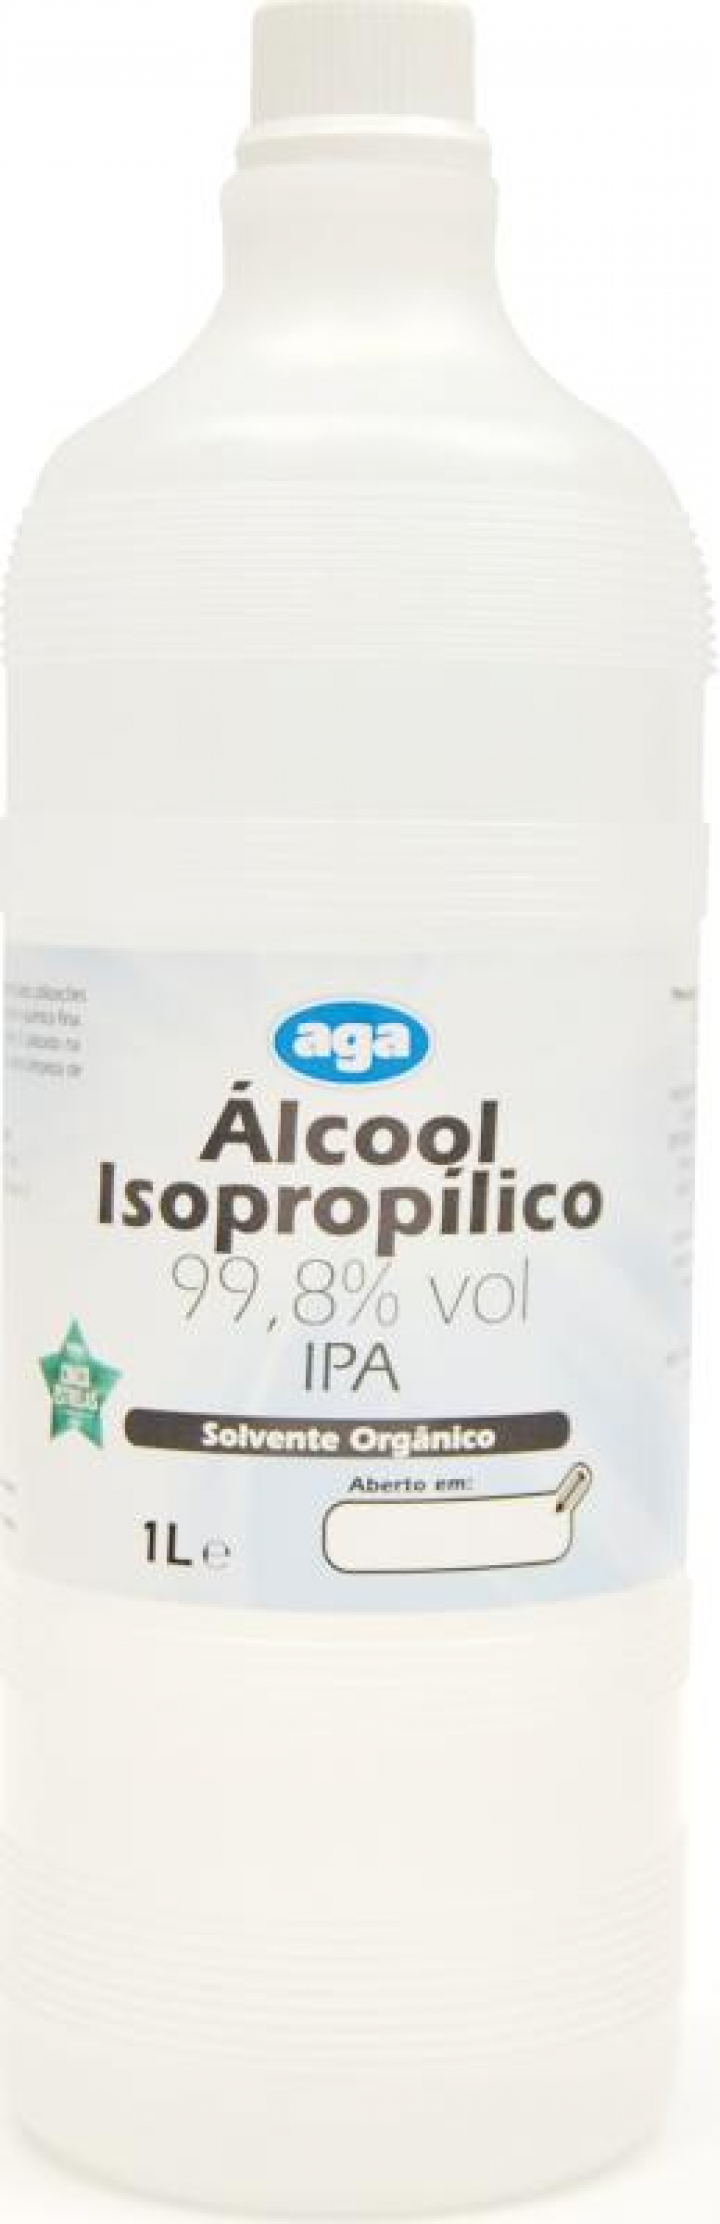 Álcool isopropílico 99,8% Vol. 1Lt